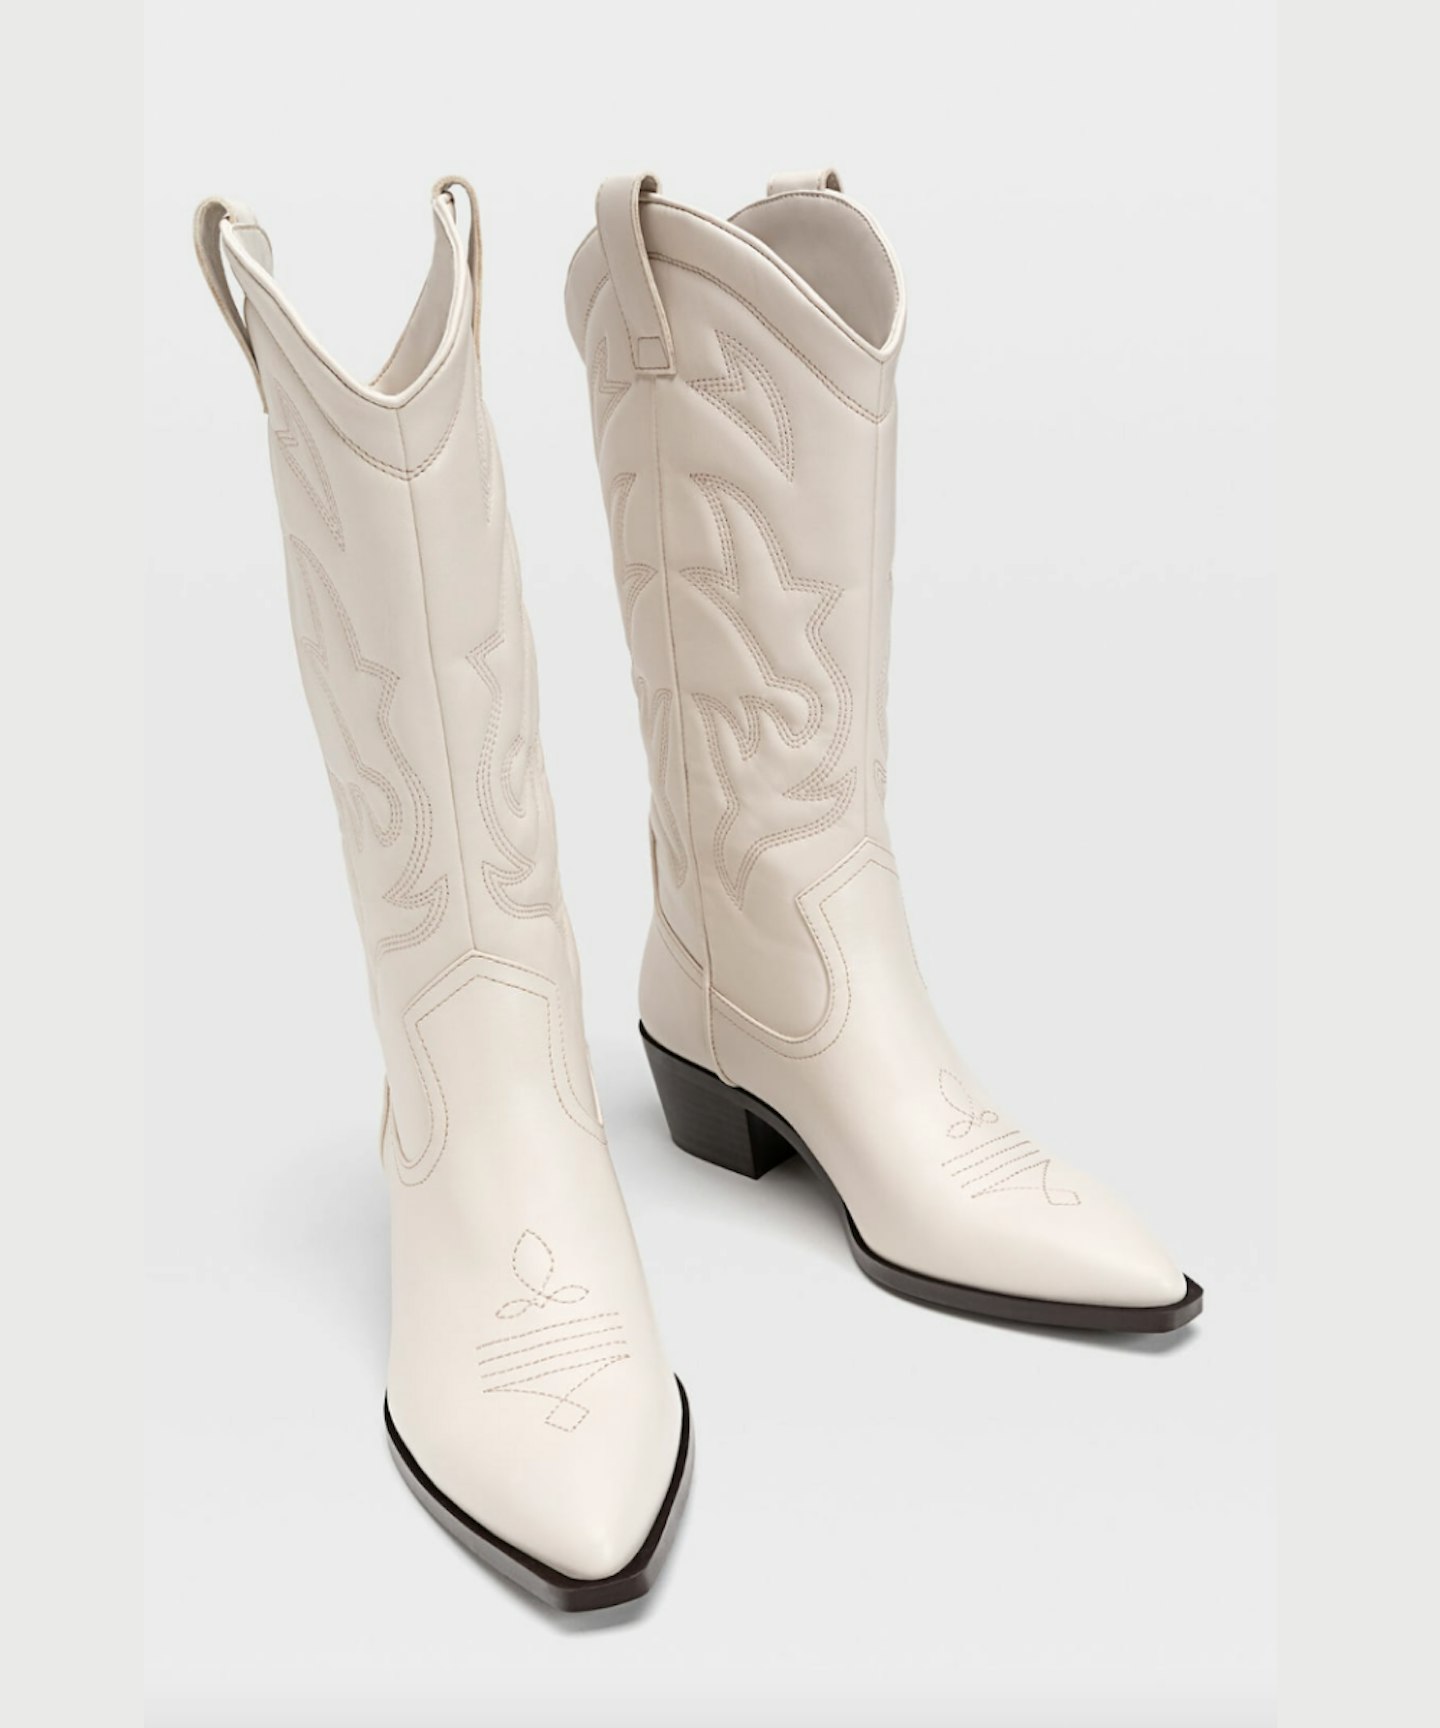 Heeled cowboy boots